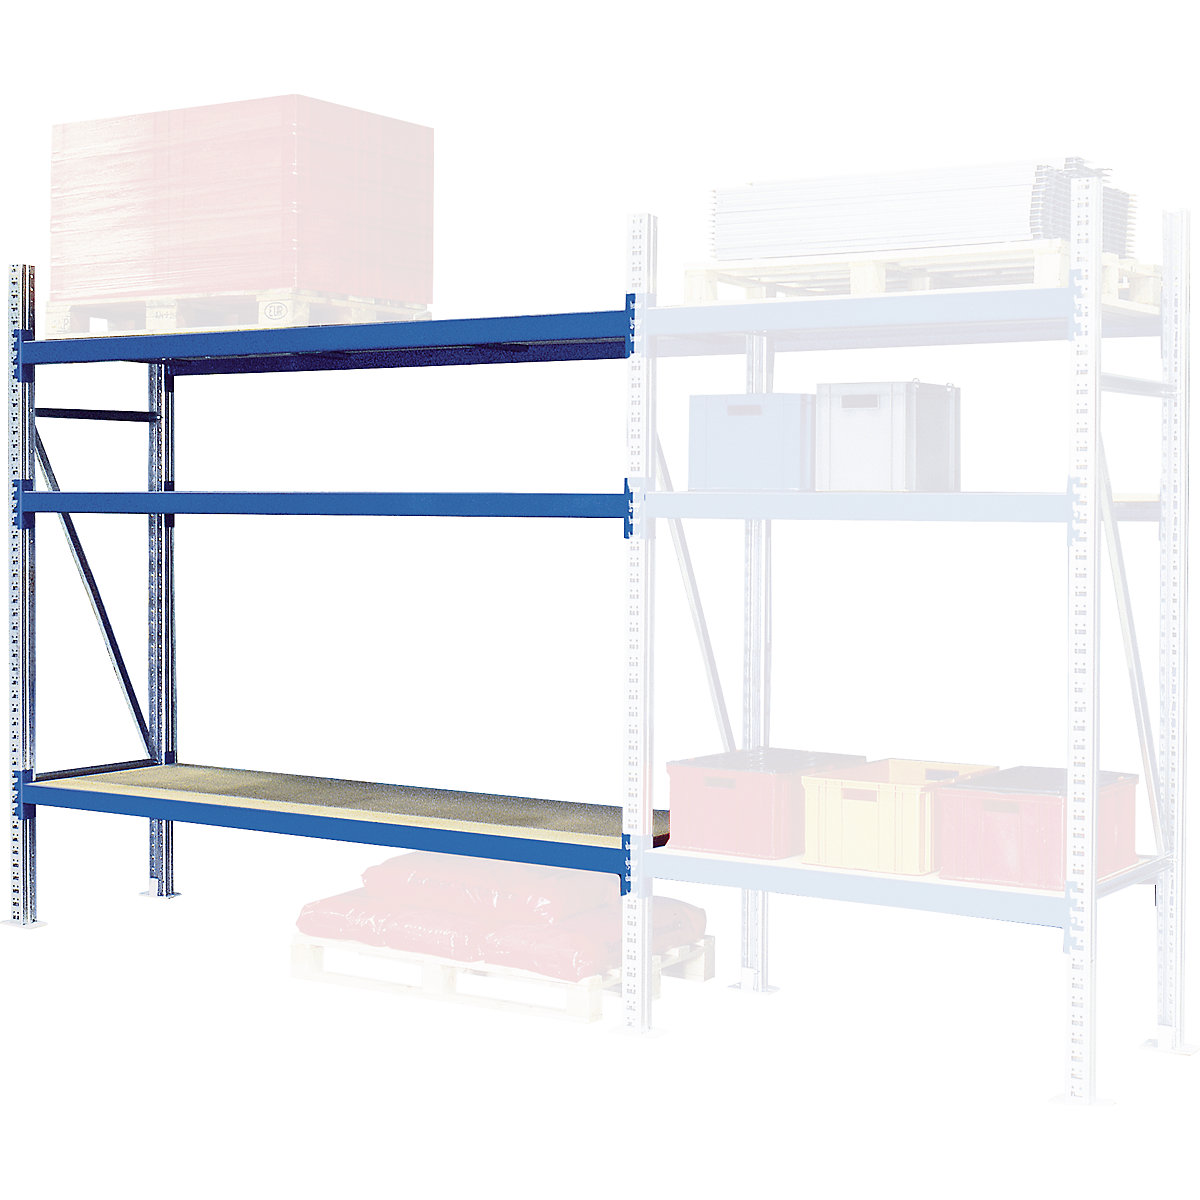 Wide span shelving unit – eurokraft pro, max. bay load 4000 kg, HxWxD 2000 x 2700 x 600 mm, extension shelf unit, blue RAL 5010